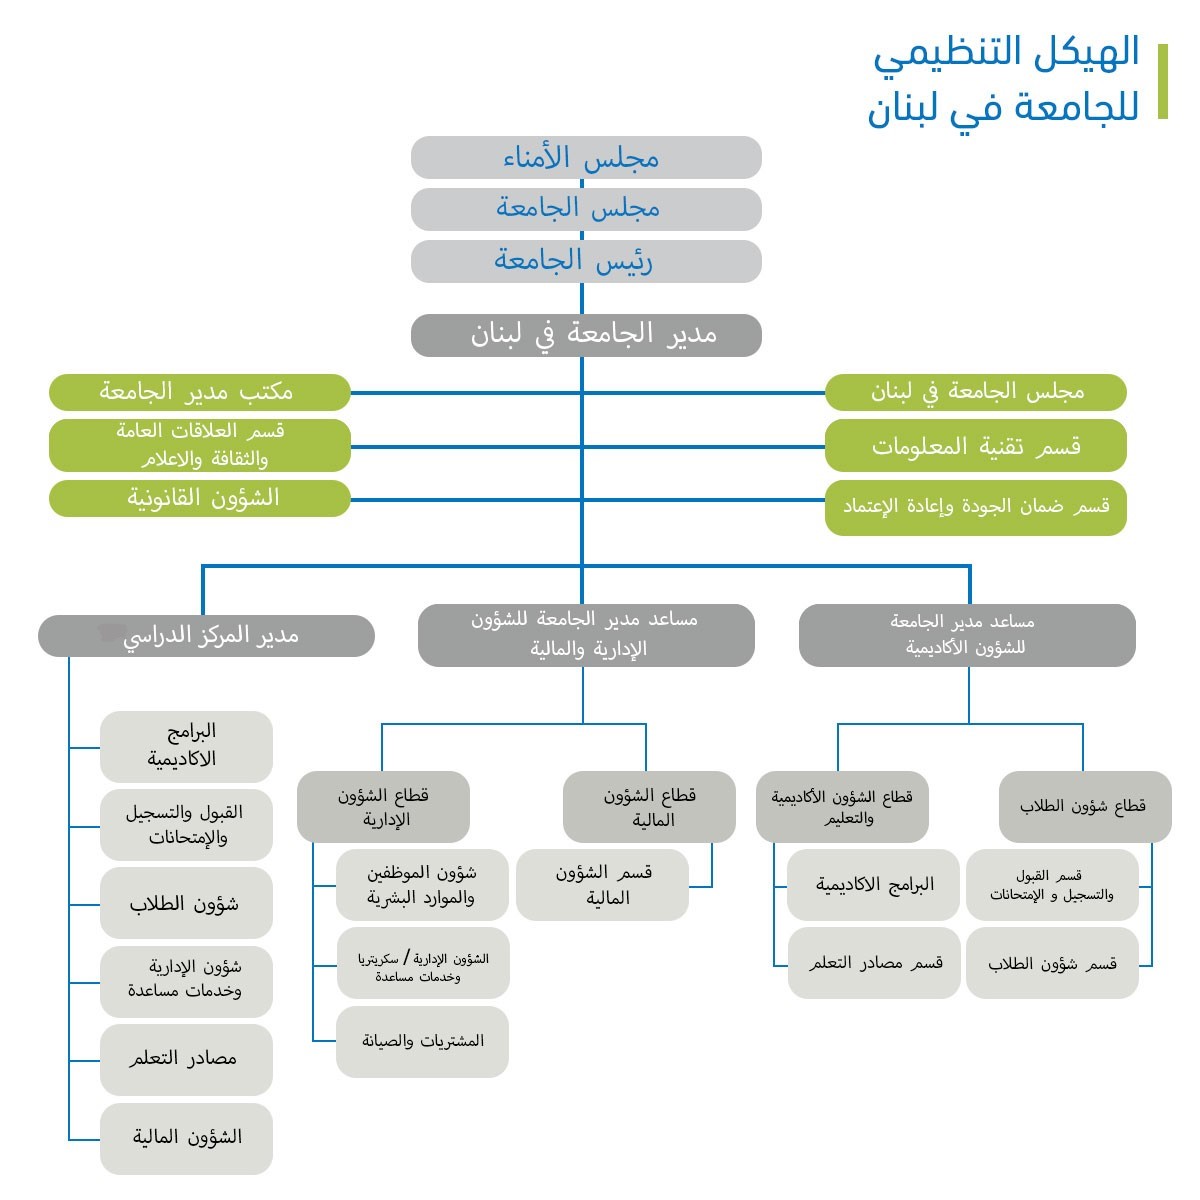 Organisational-chart--website-Arabic.jpg